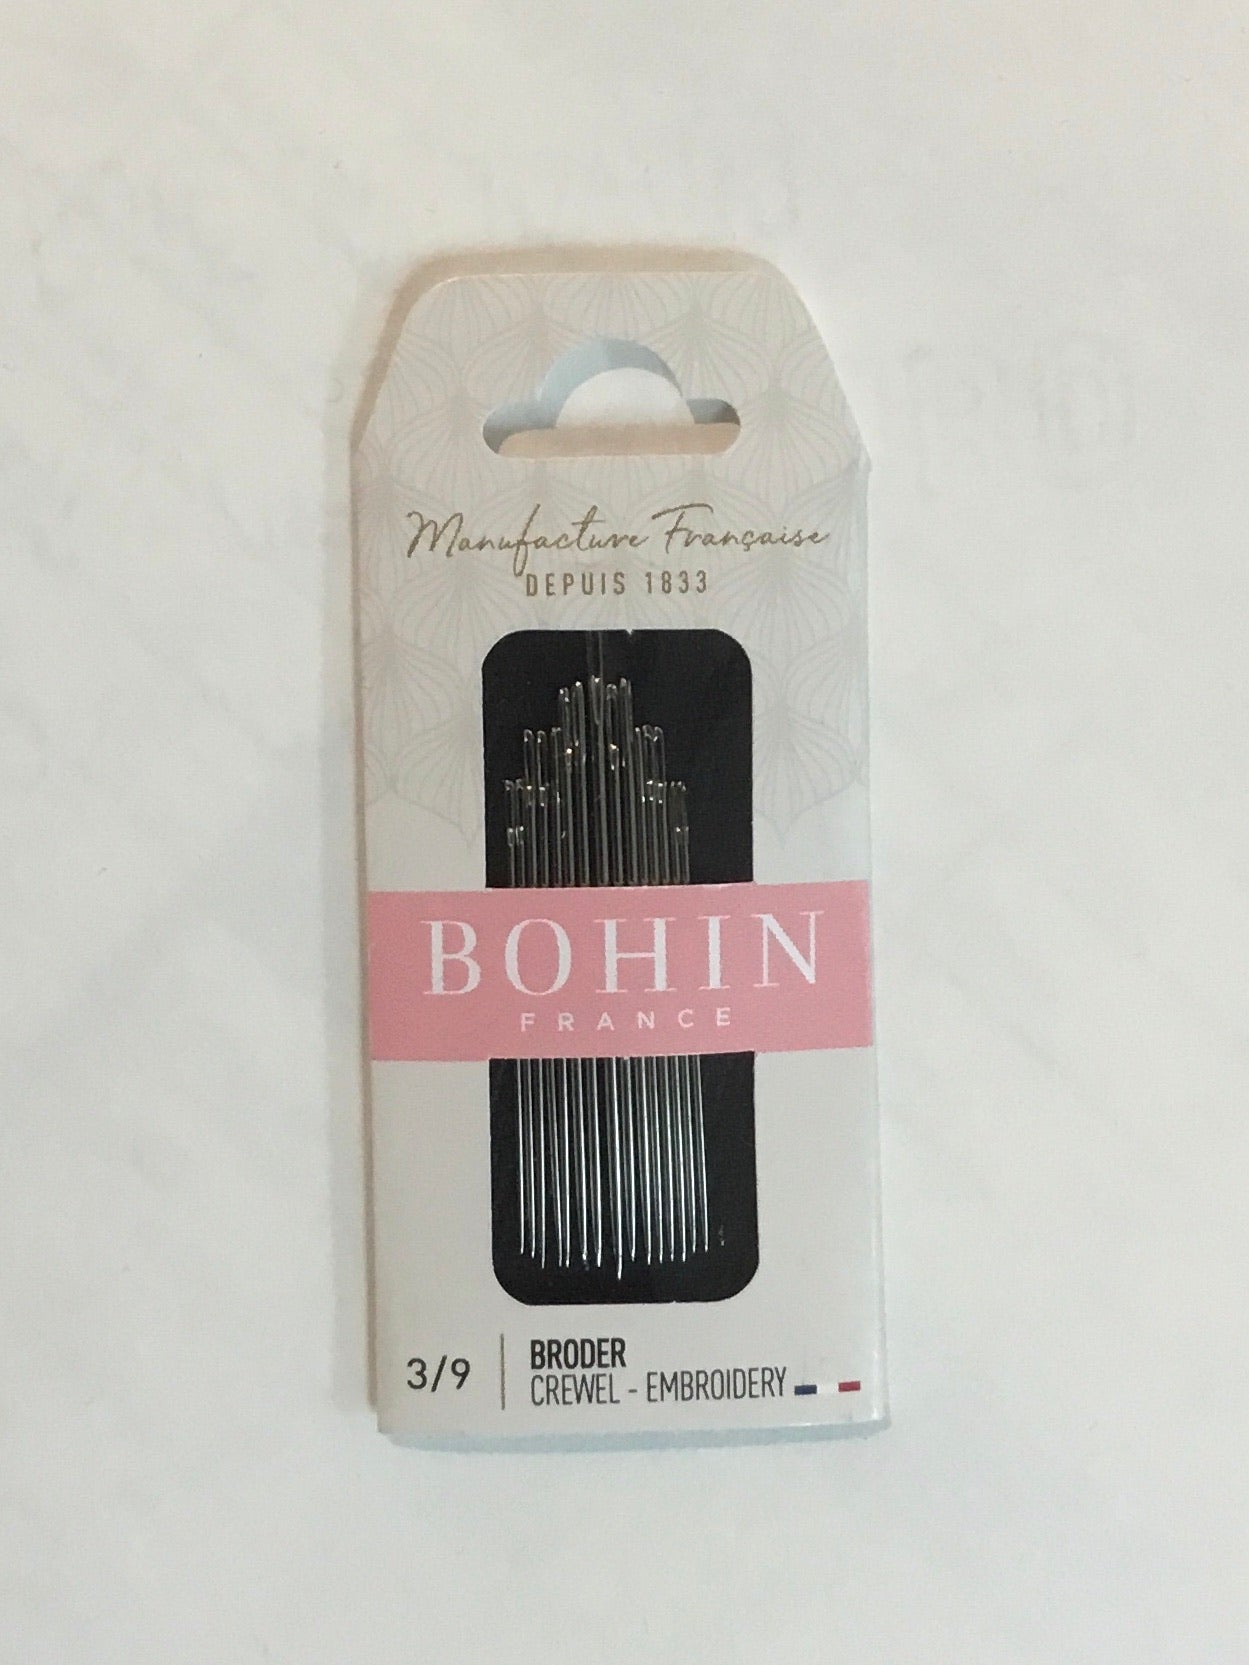 Bohin 3/9 Broder Crewel Embroidery needles